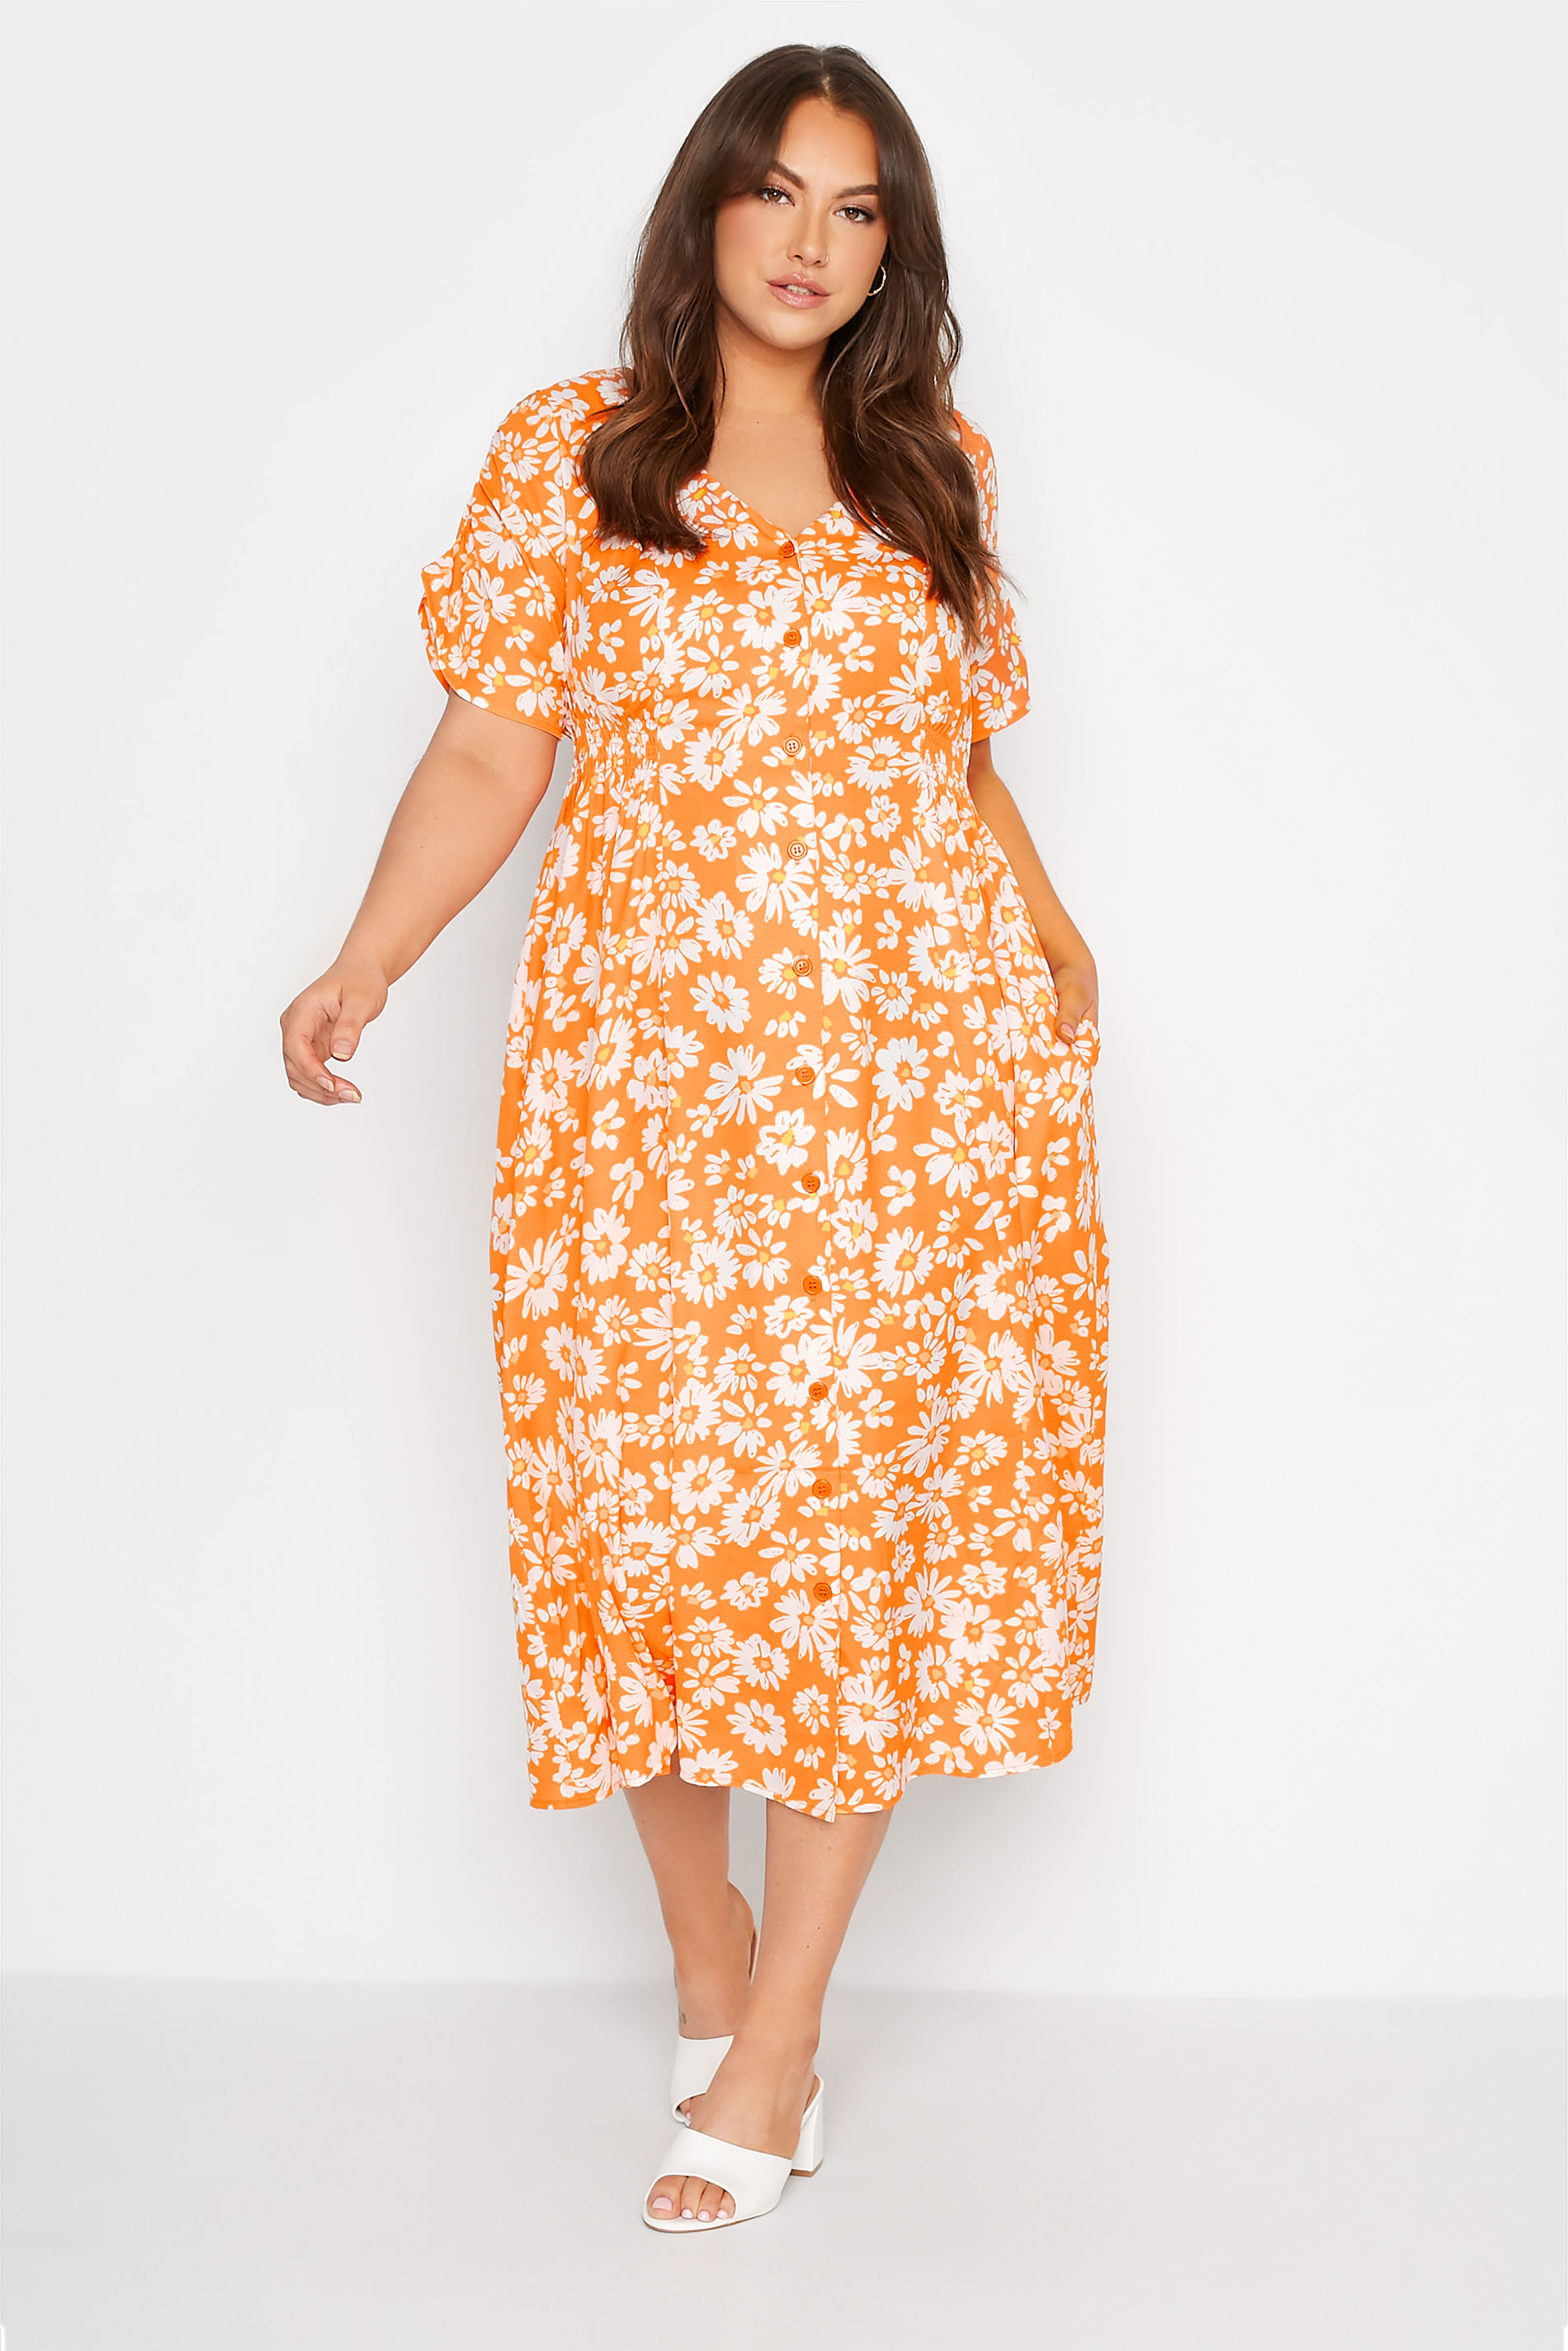 LIMITED COLLECTION Curve Orange Daisy Print Tea Dress_A.jpg